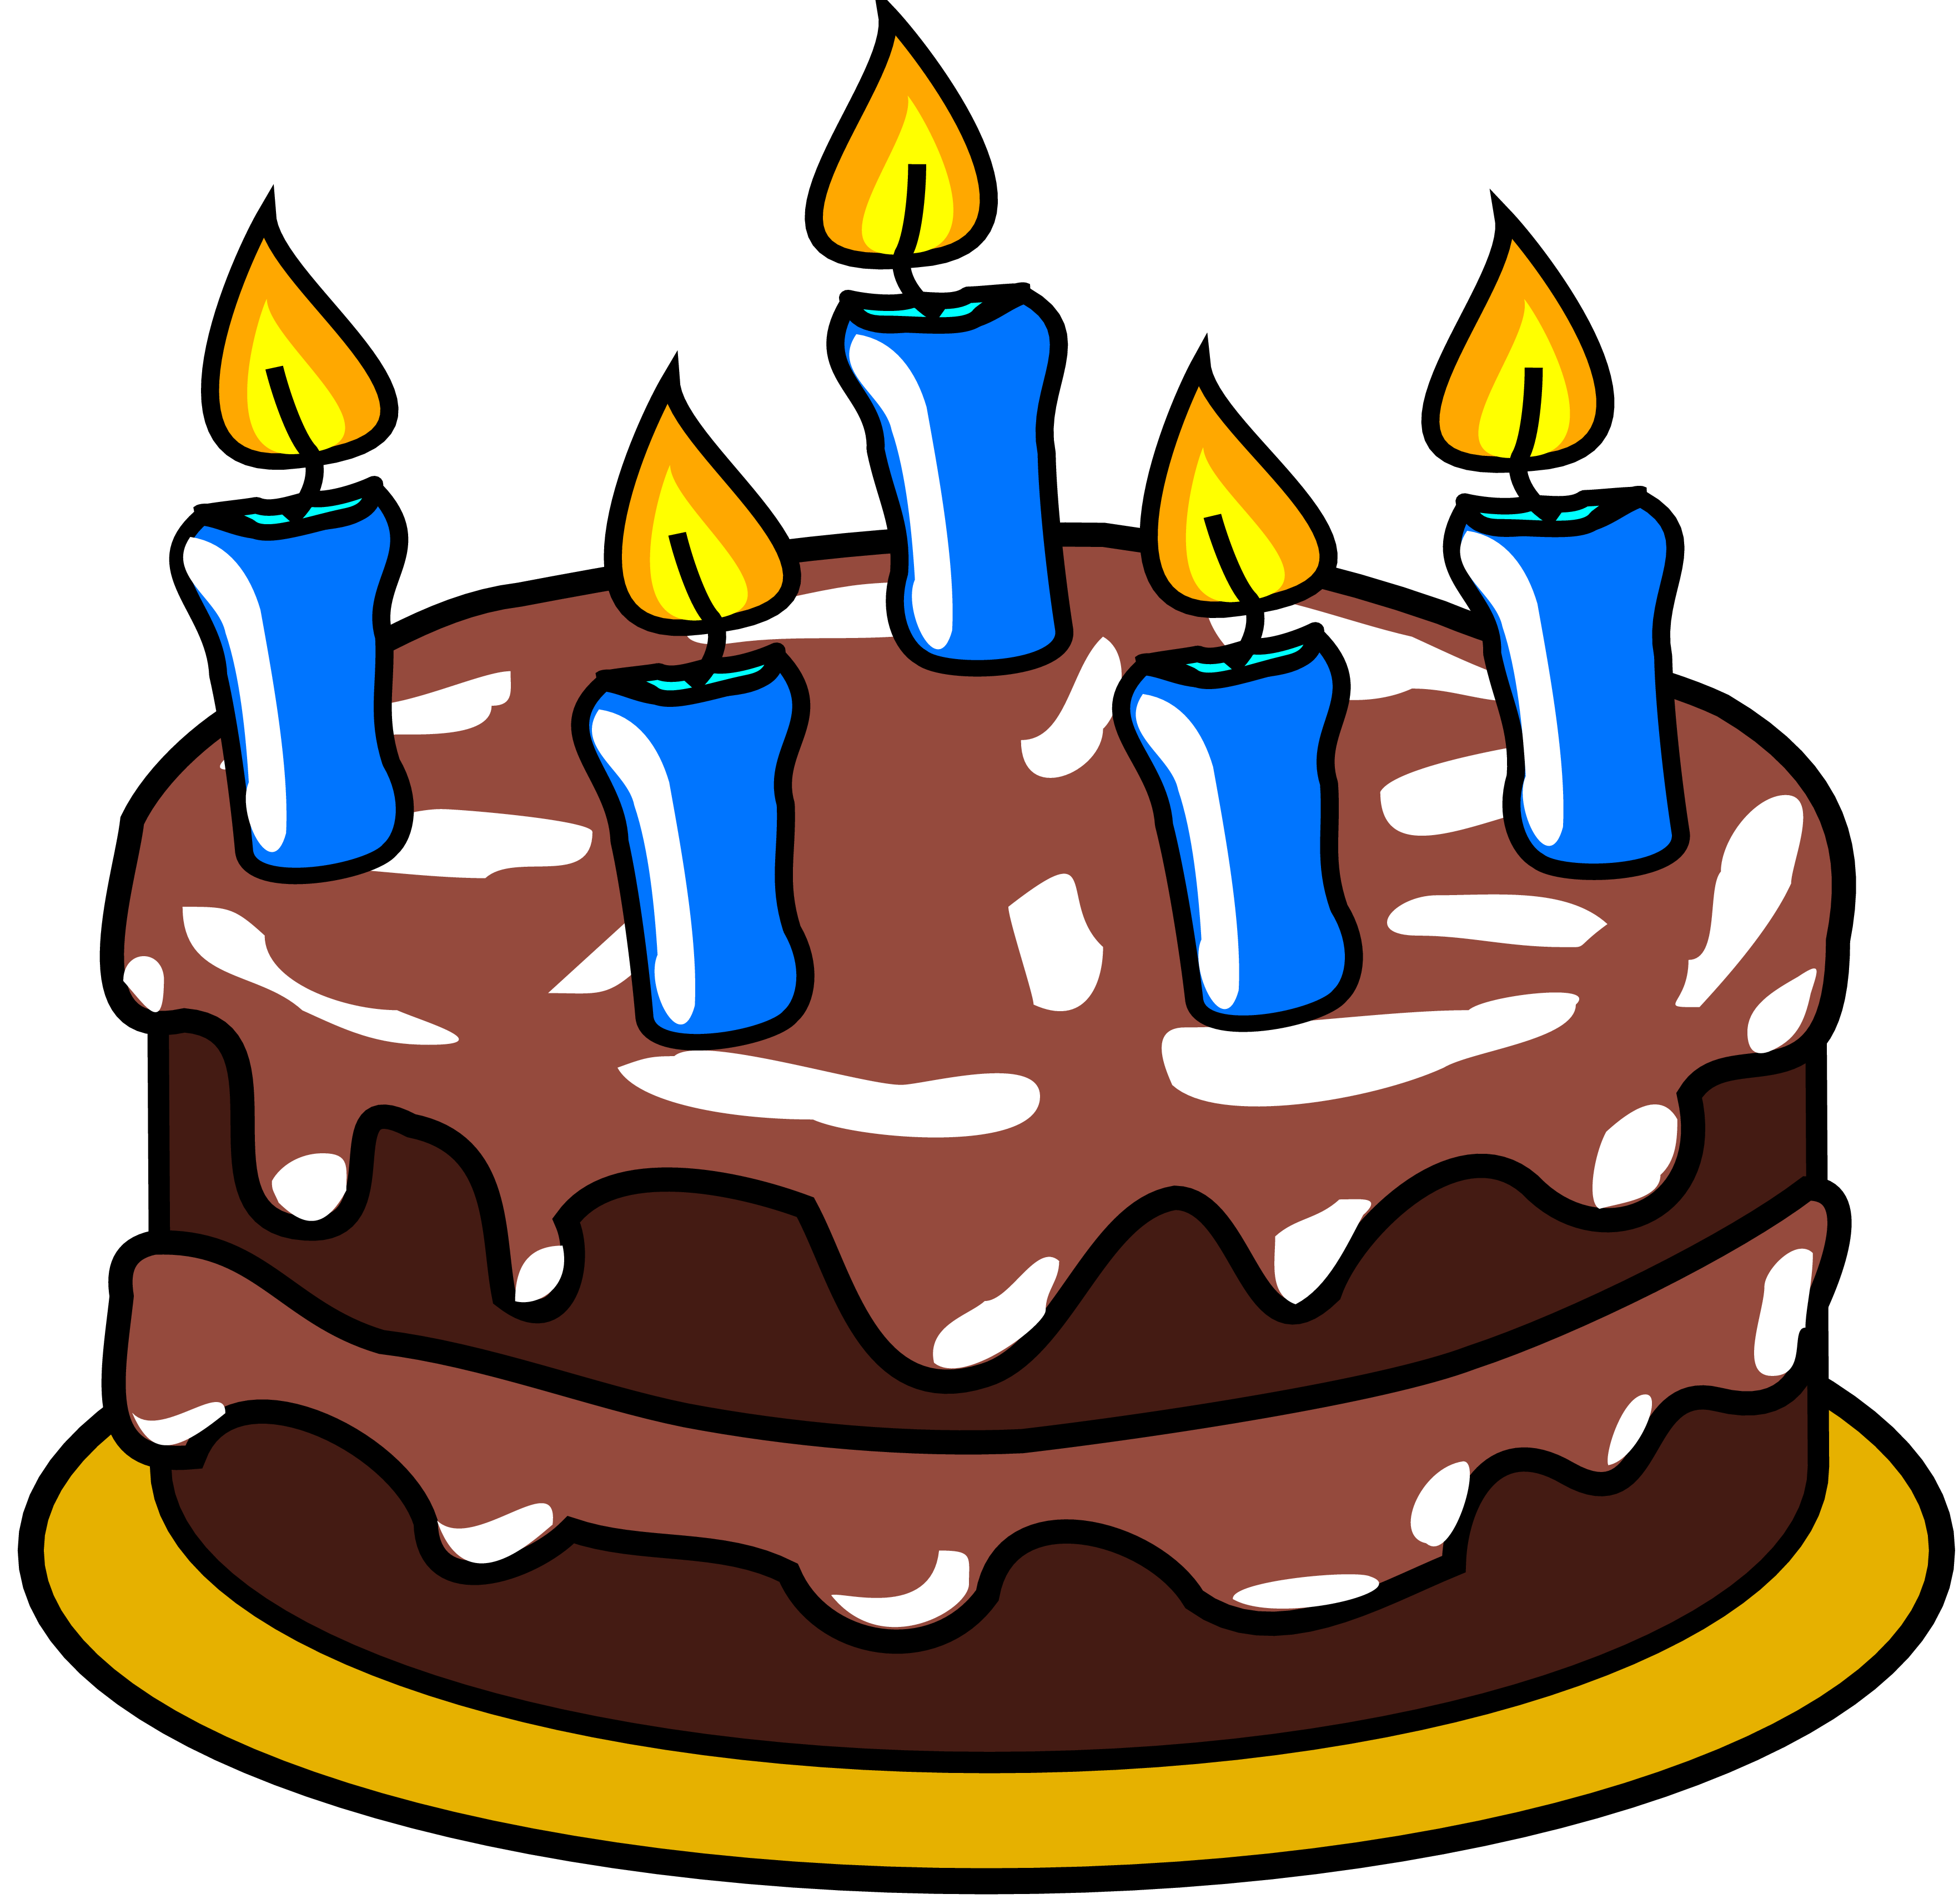 Download Cake, Festival, Dessert. Royalty-Free Vector Graphic - Pixabay